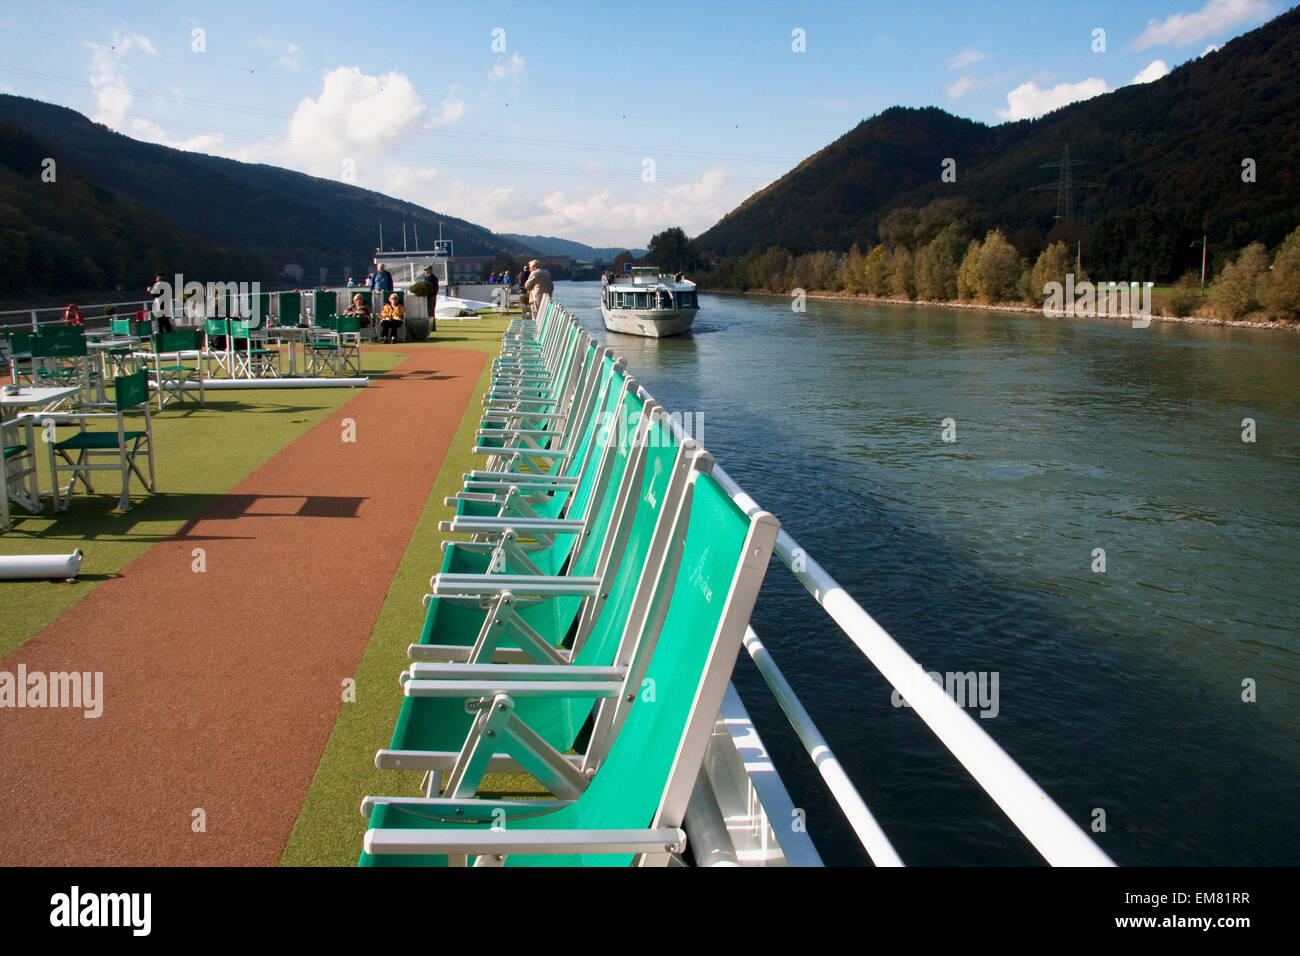 Amadeus Symphony Cruise boat on the Danube River near Jochenstein, Upper Austria, Austria Stock Photo